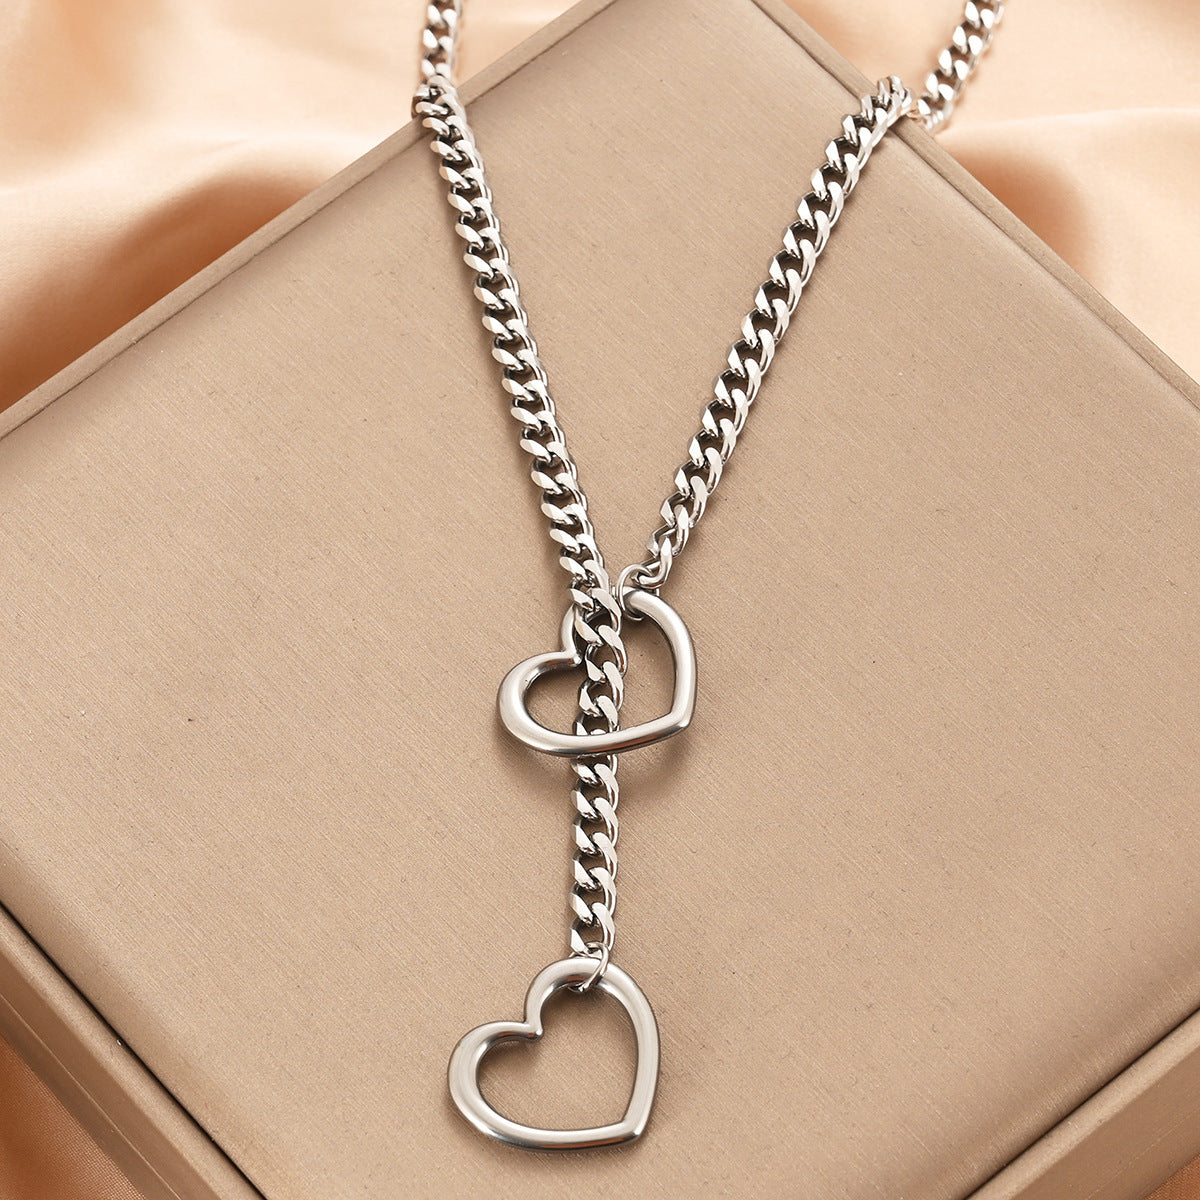 Stainless Steel Lariat Heart Necklace - Heavy Ring Cuban Chain Choker for Women & Men